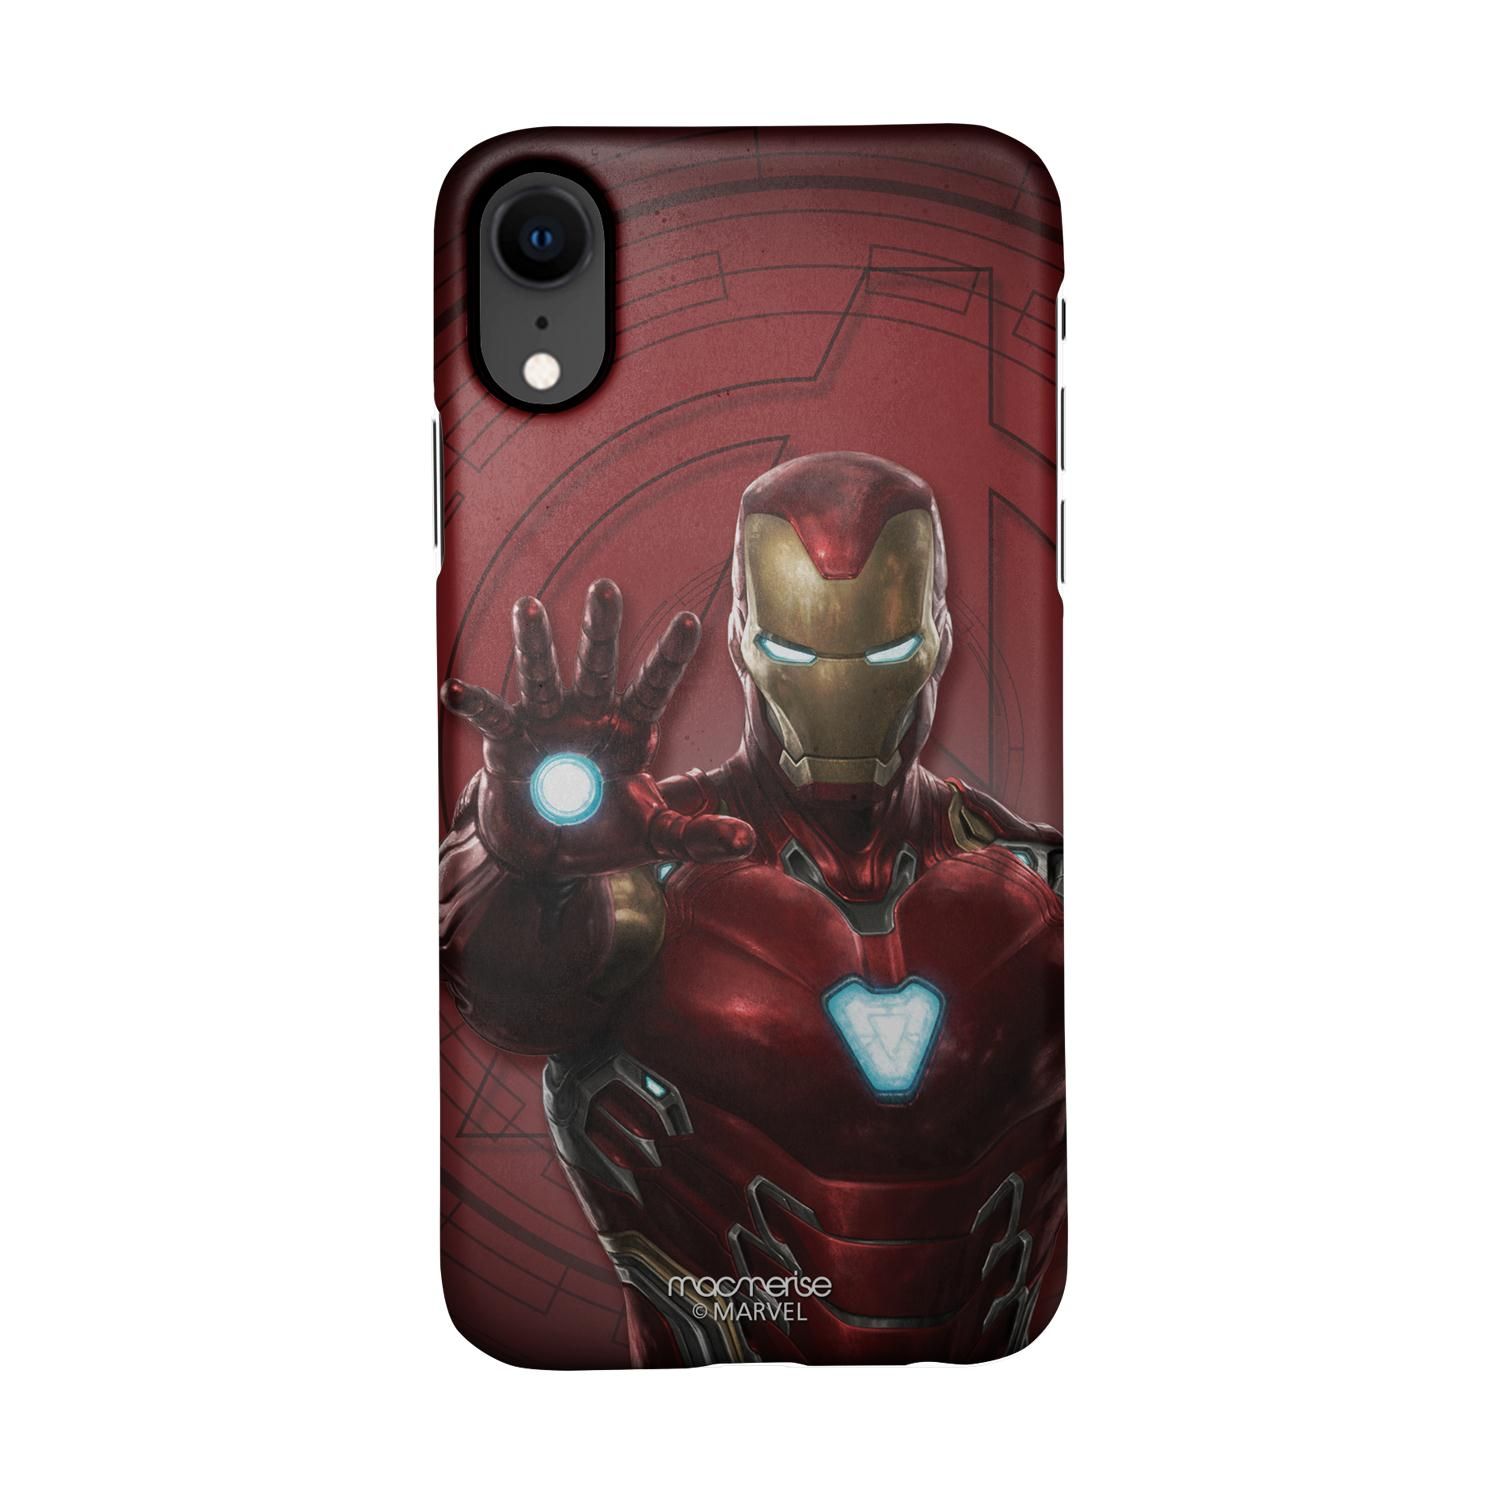 Buy Iron man Mark L Armor - Sleek Phone Case for iPhone XR Online